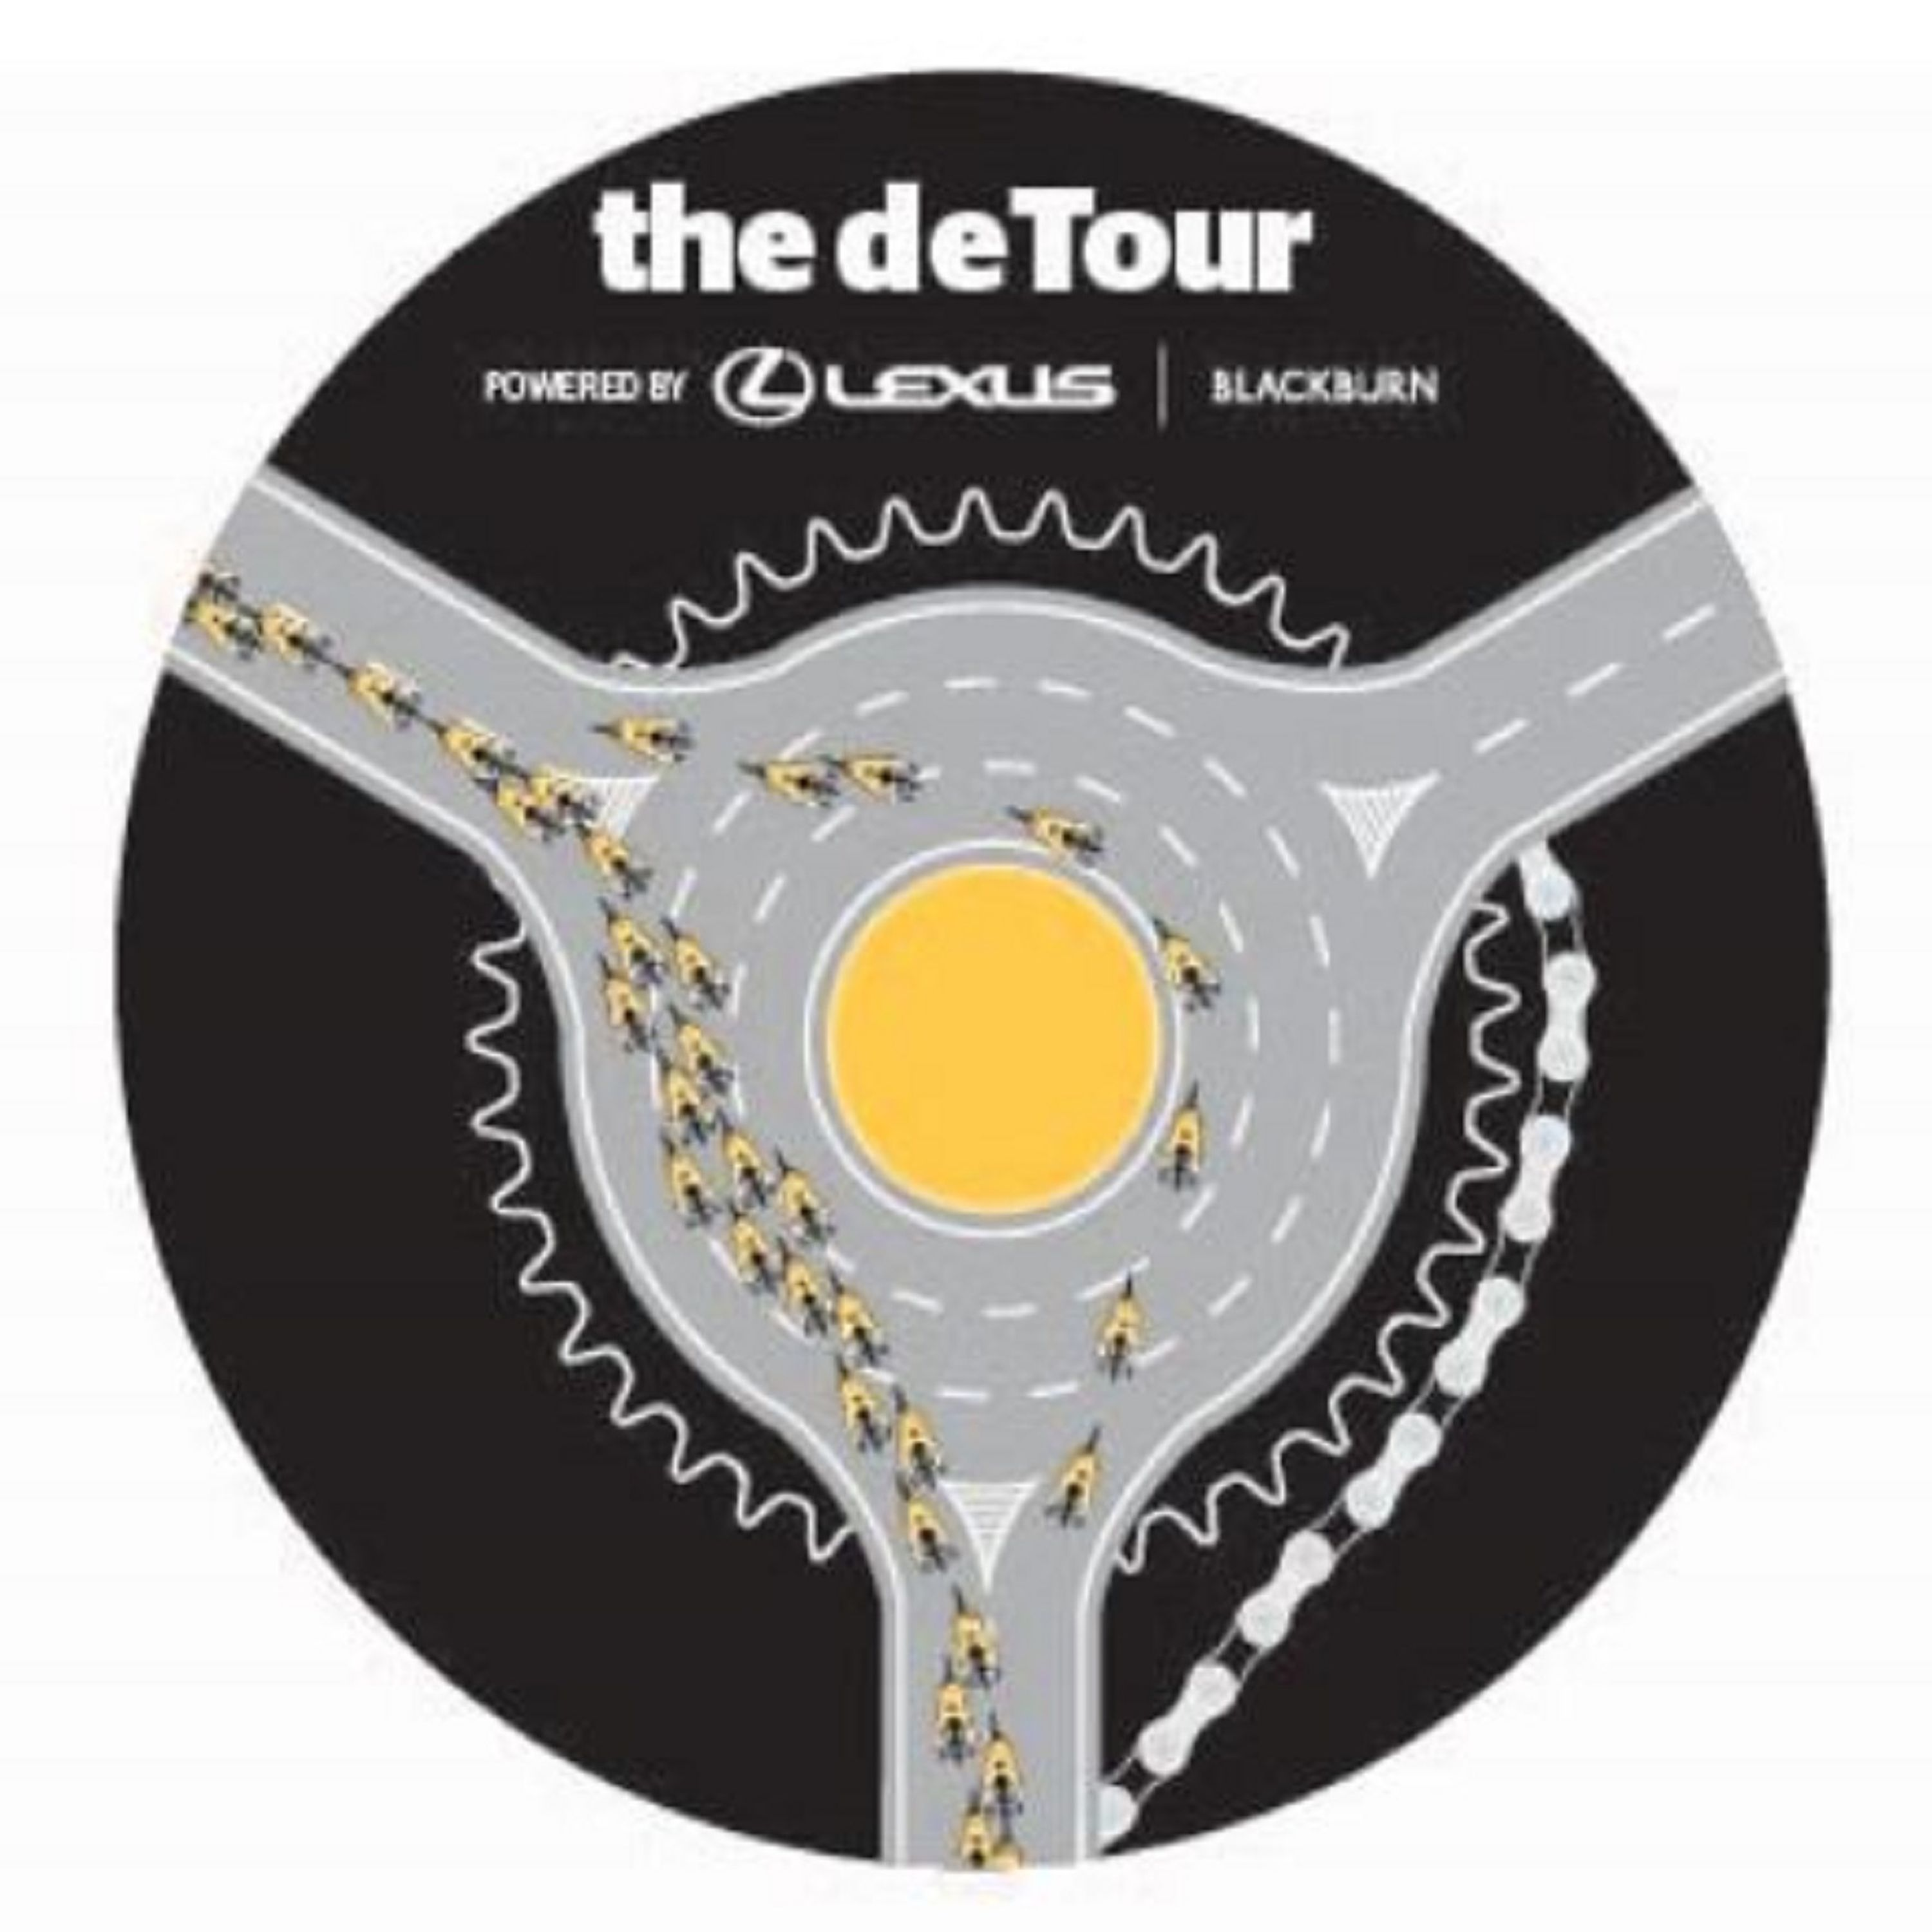 The de Tour pre-Tour